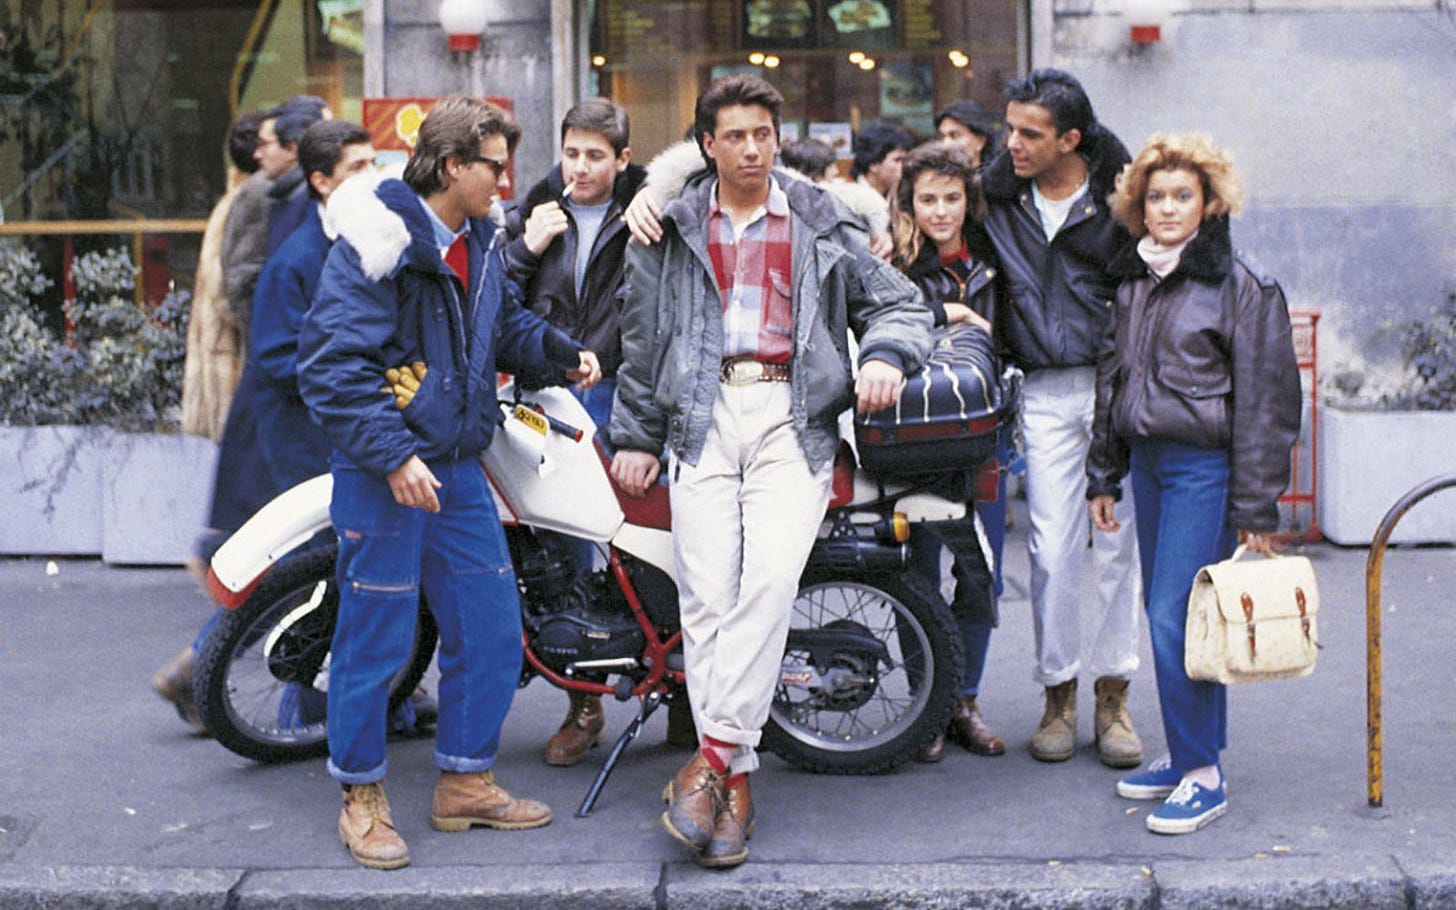 Milan's Paninari were the hypebeasts of the 80s